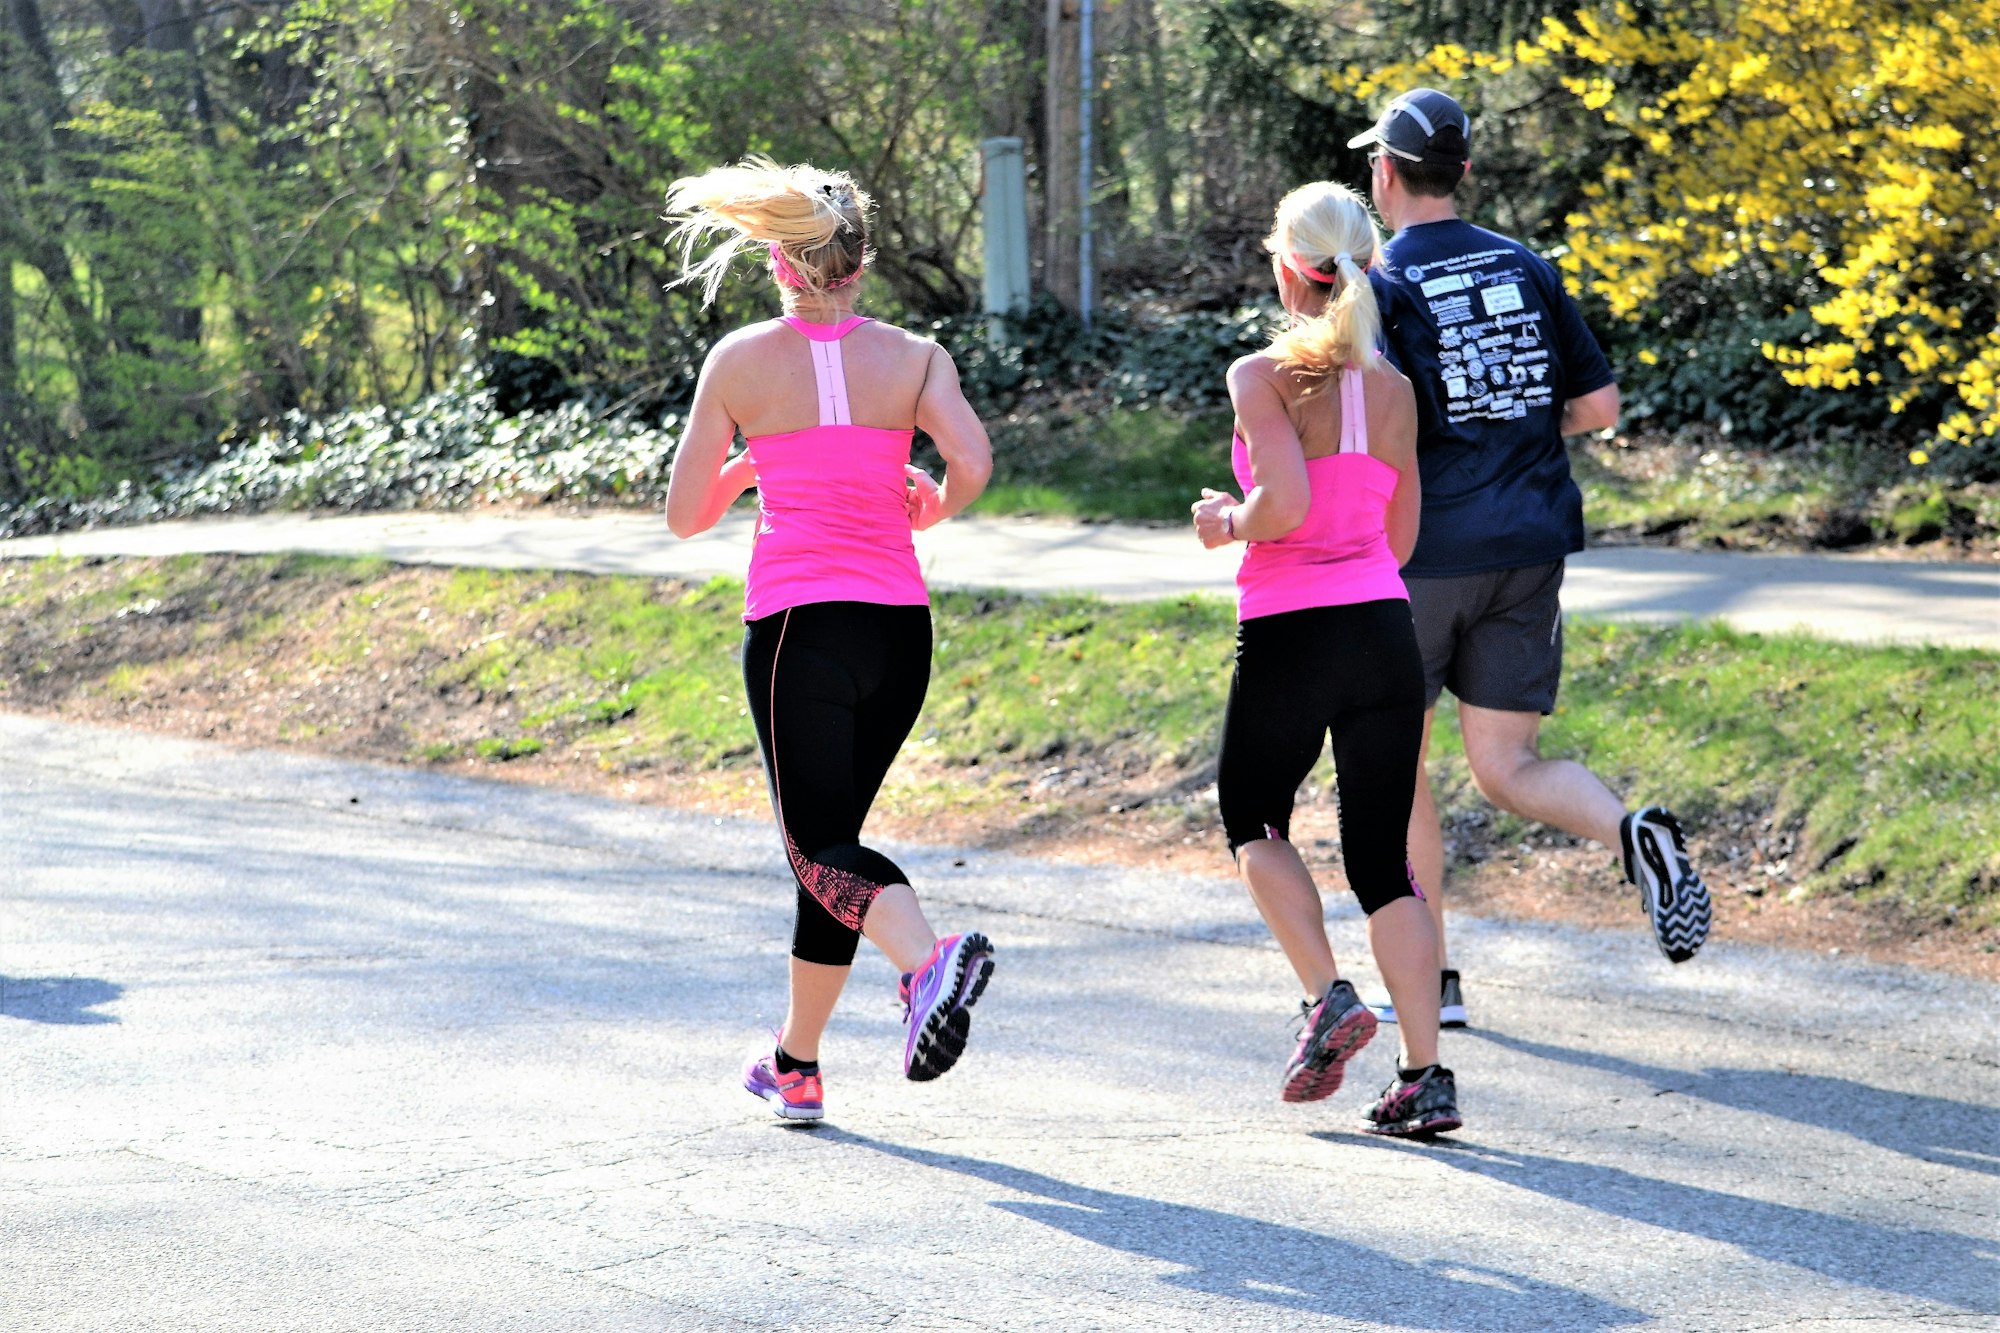 People running in a marathon community event